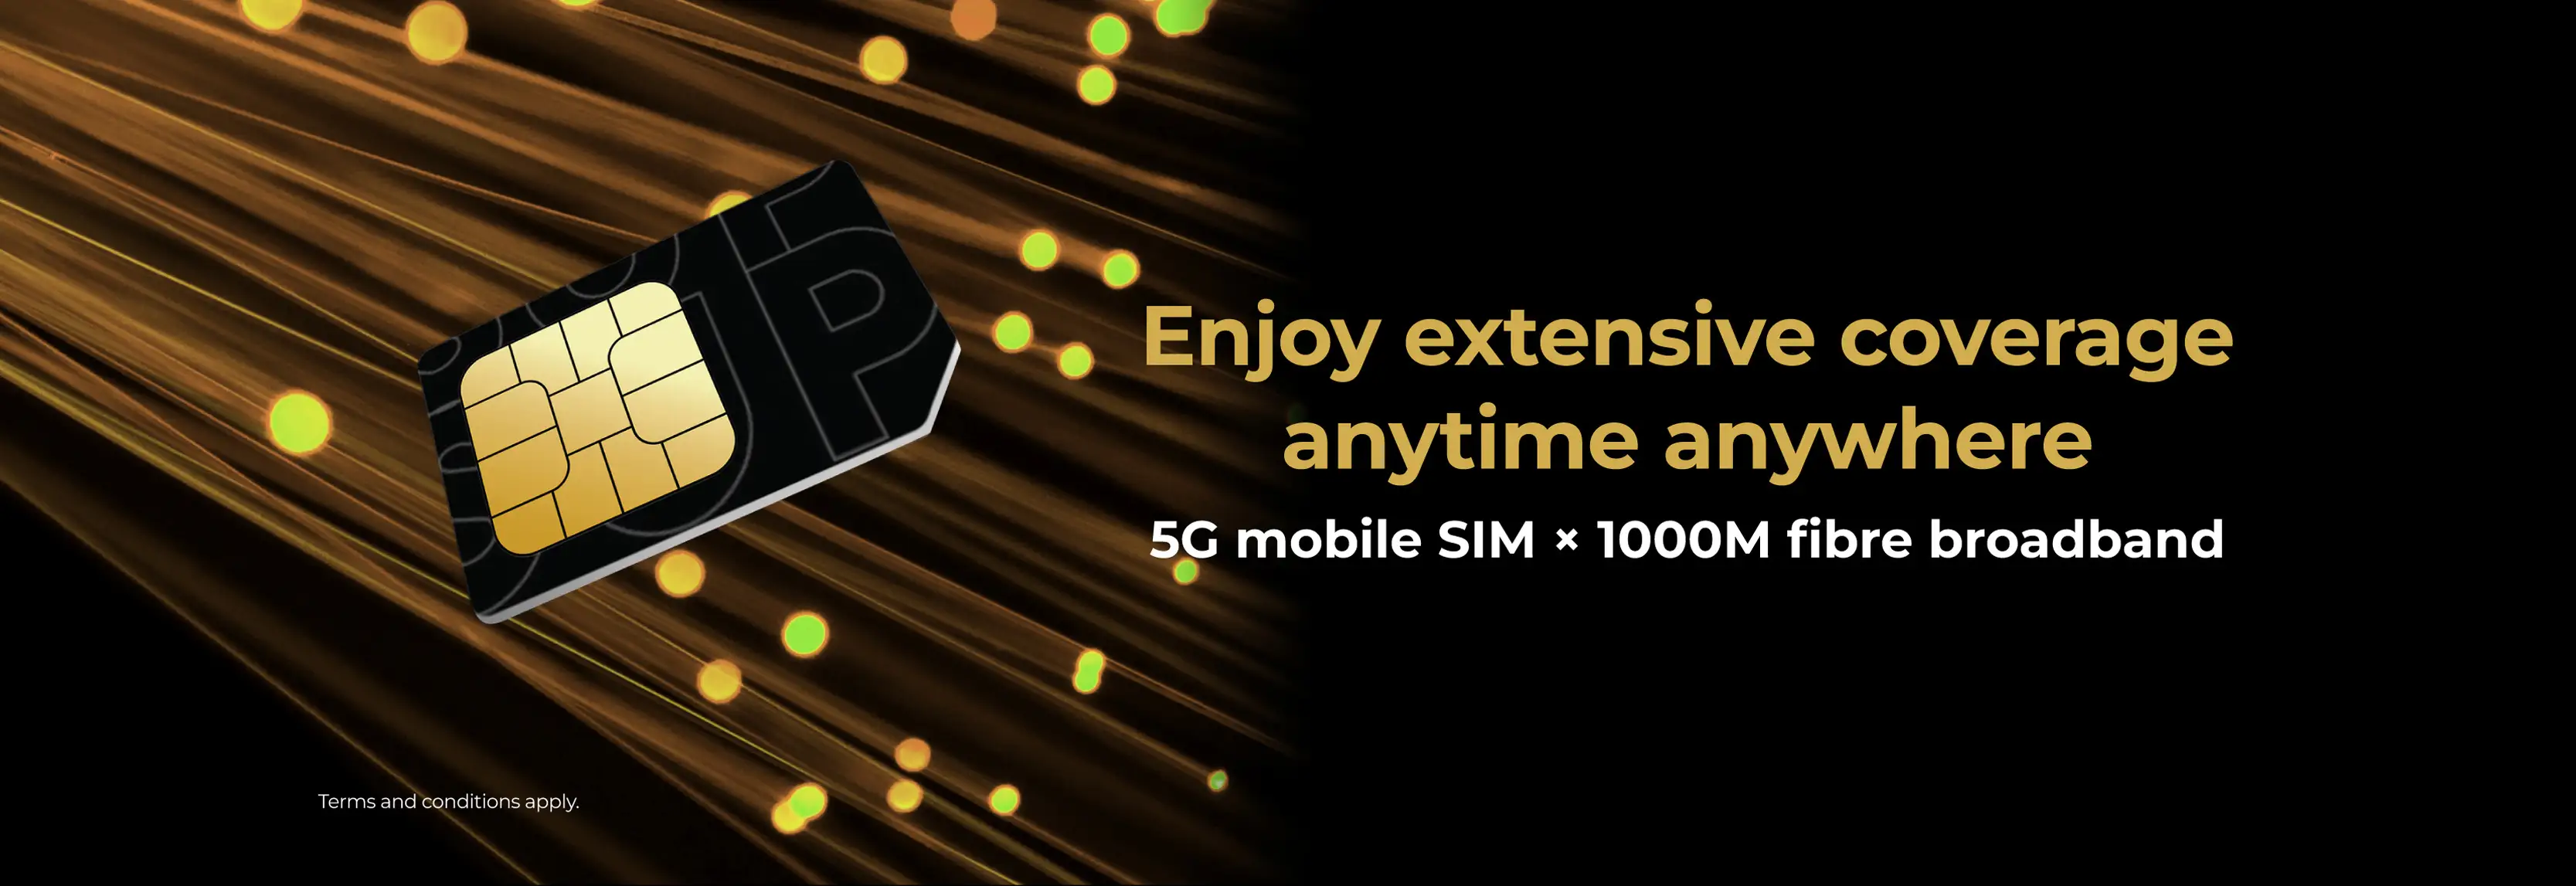 Enjoy extensive coverage anytime anywhere 5G mobile SIM x 1000M fibre broadband